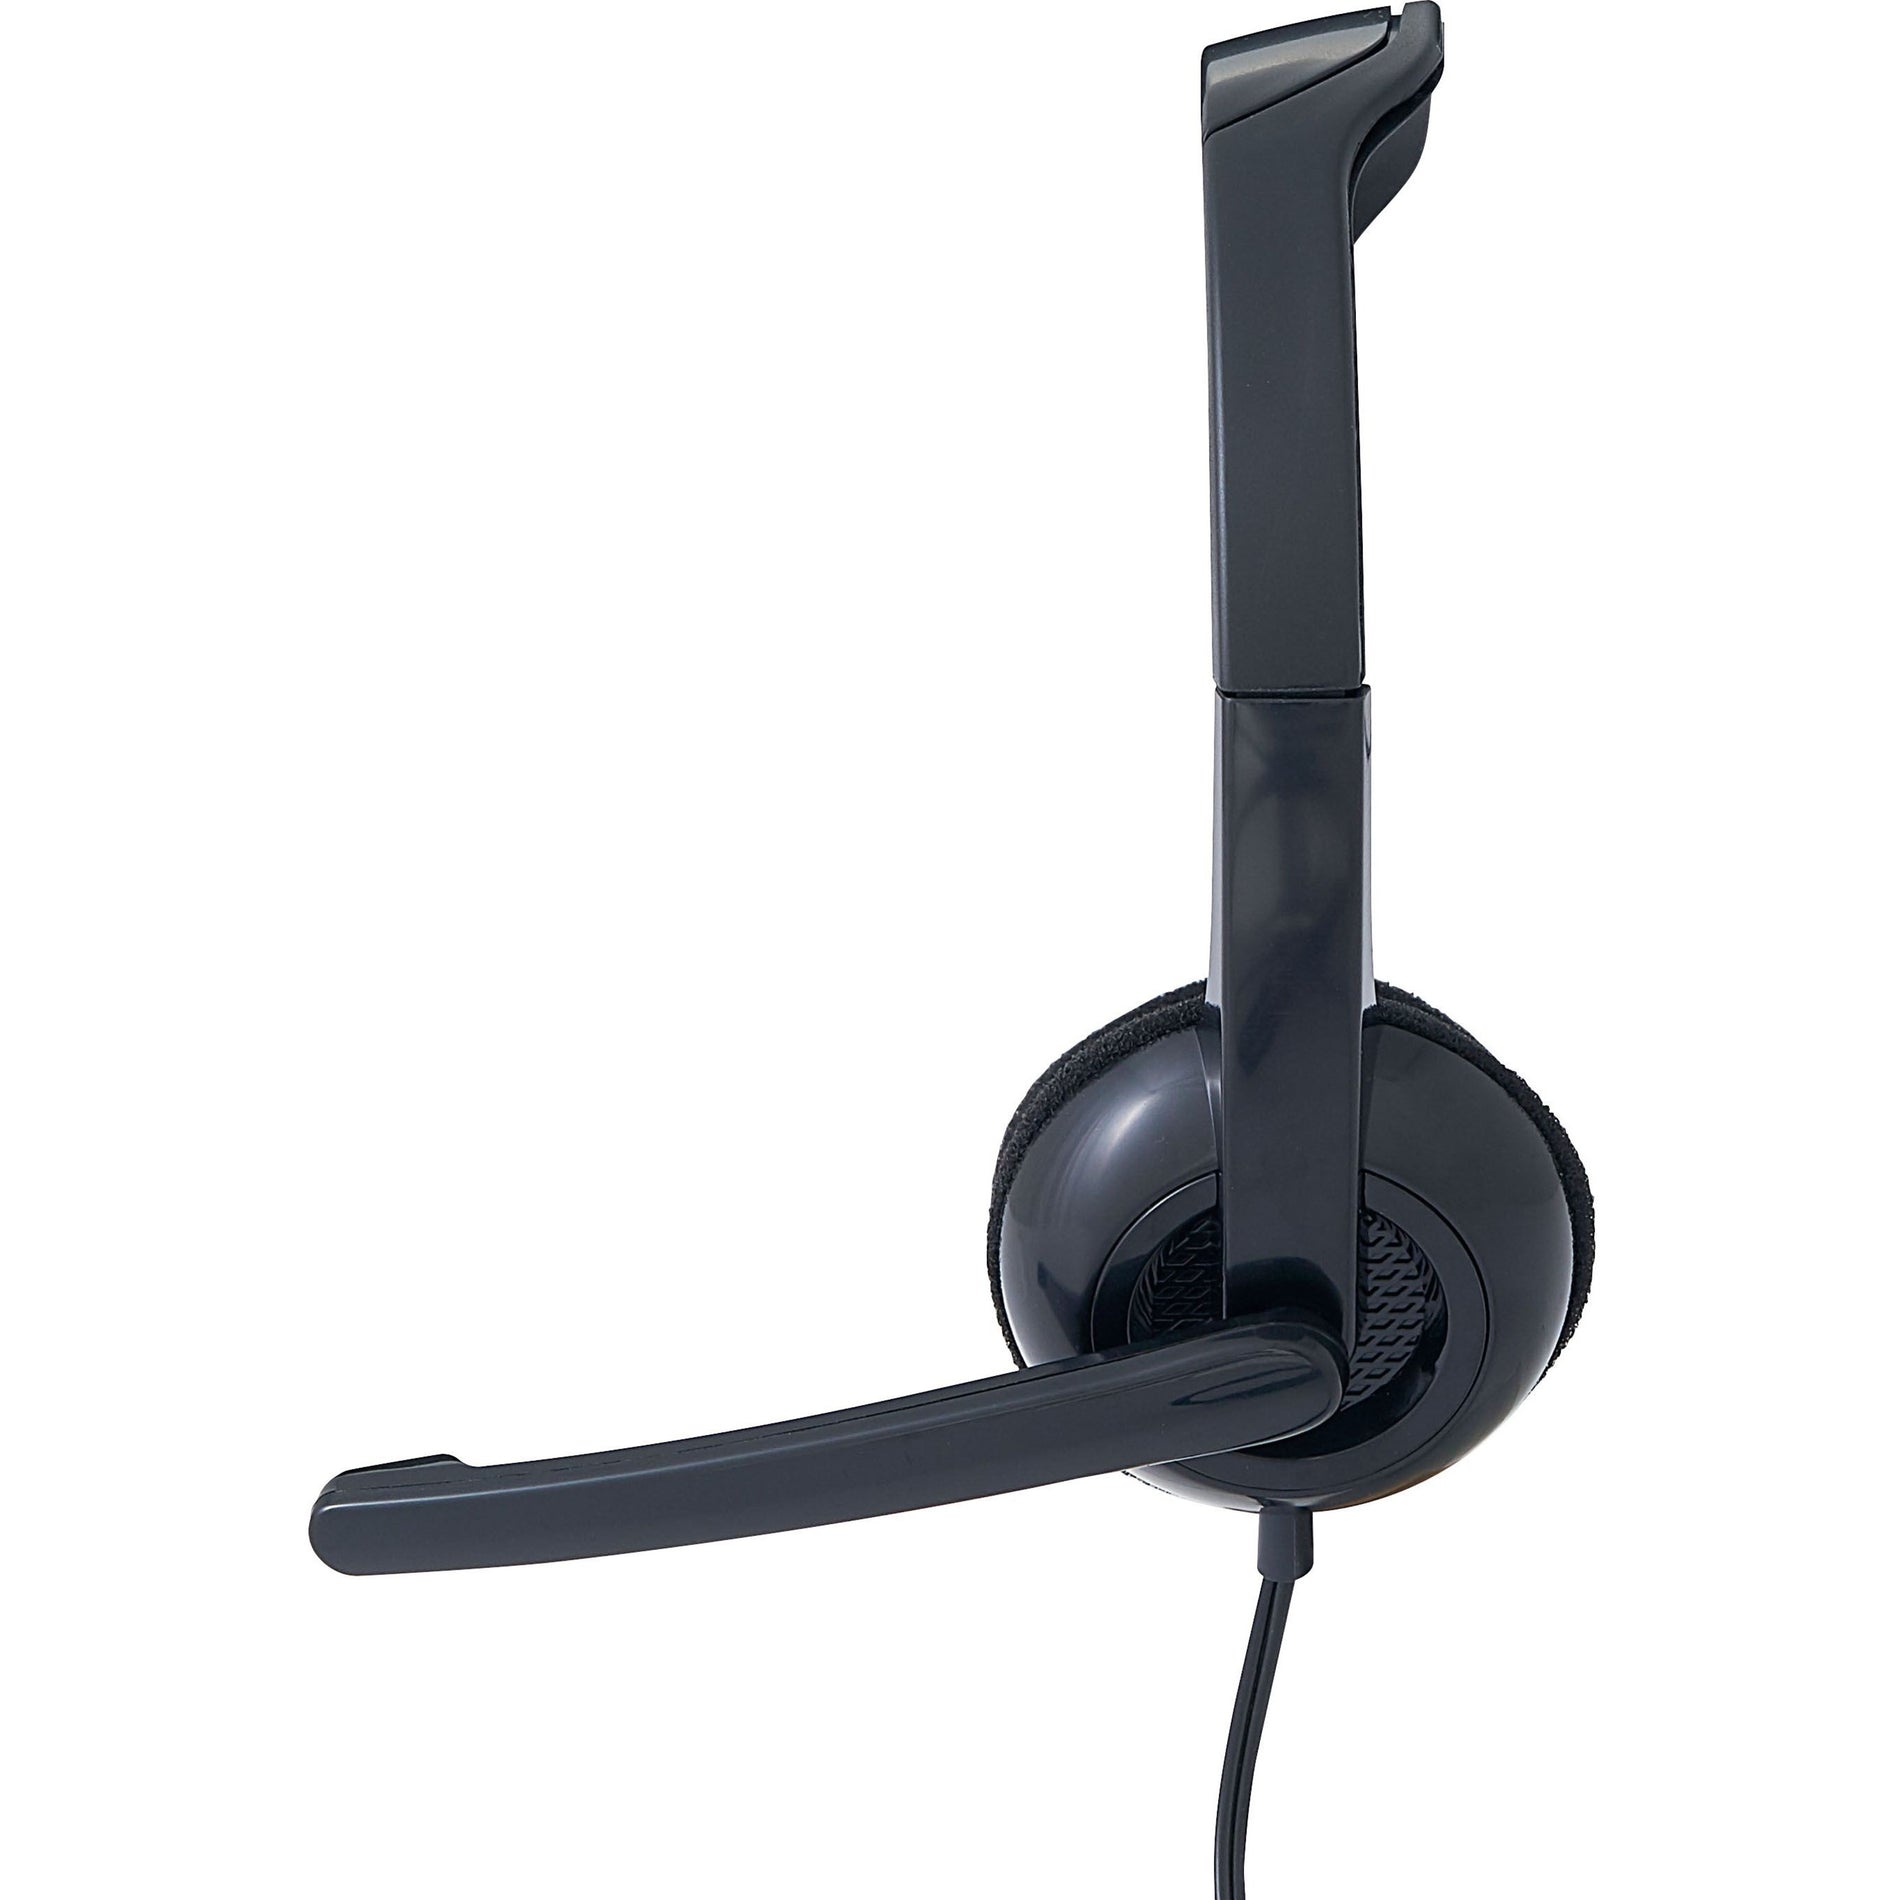 Verbatim 70721 Stereo Headset with Microphone, Adjustable Headband, Rotating Microphone, Plug and Play, Comfortable, Ergonomic Design